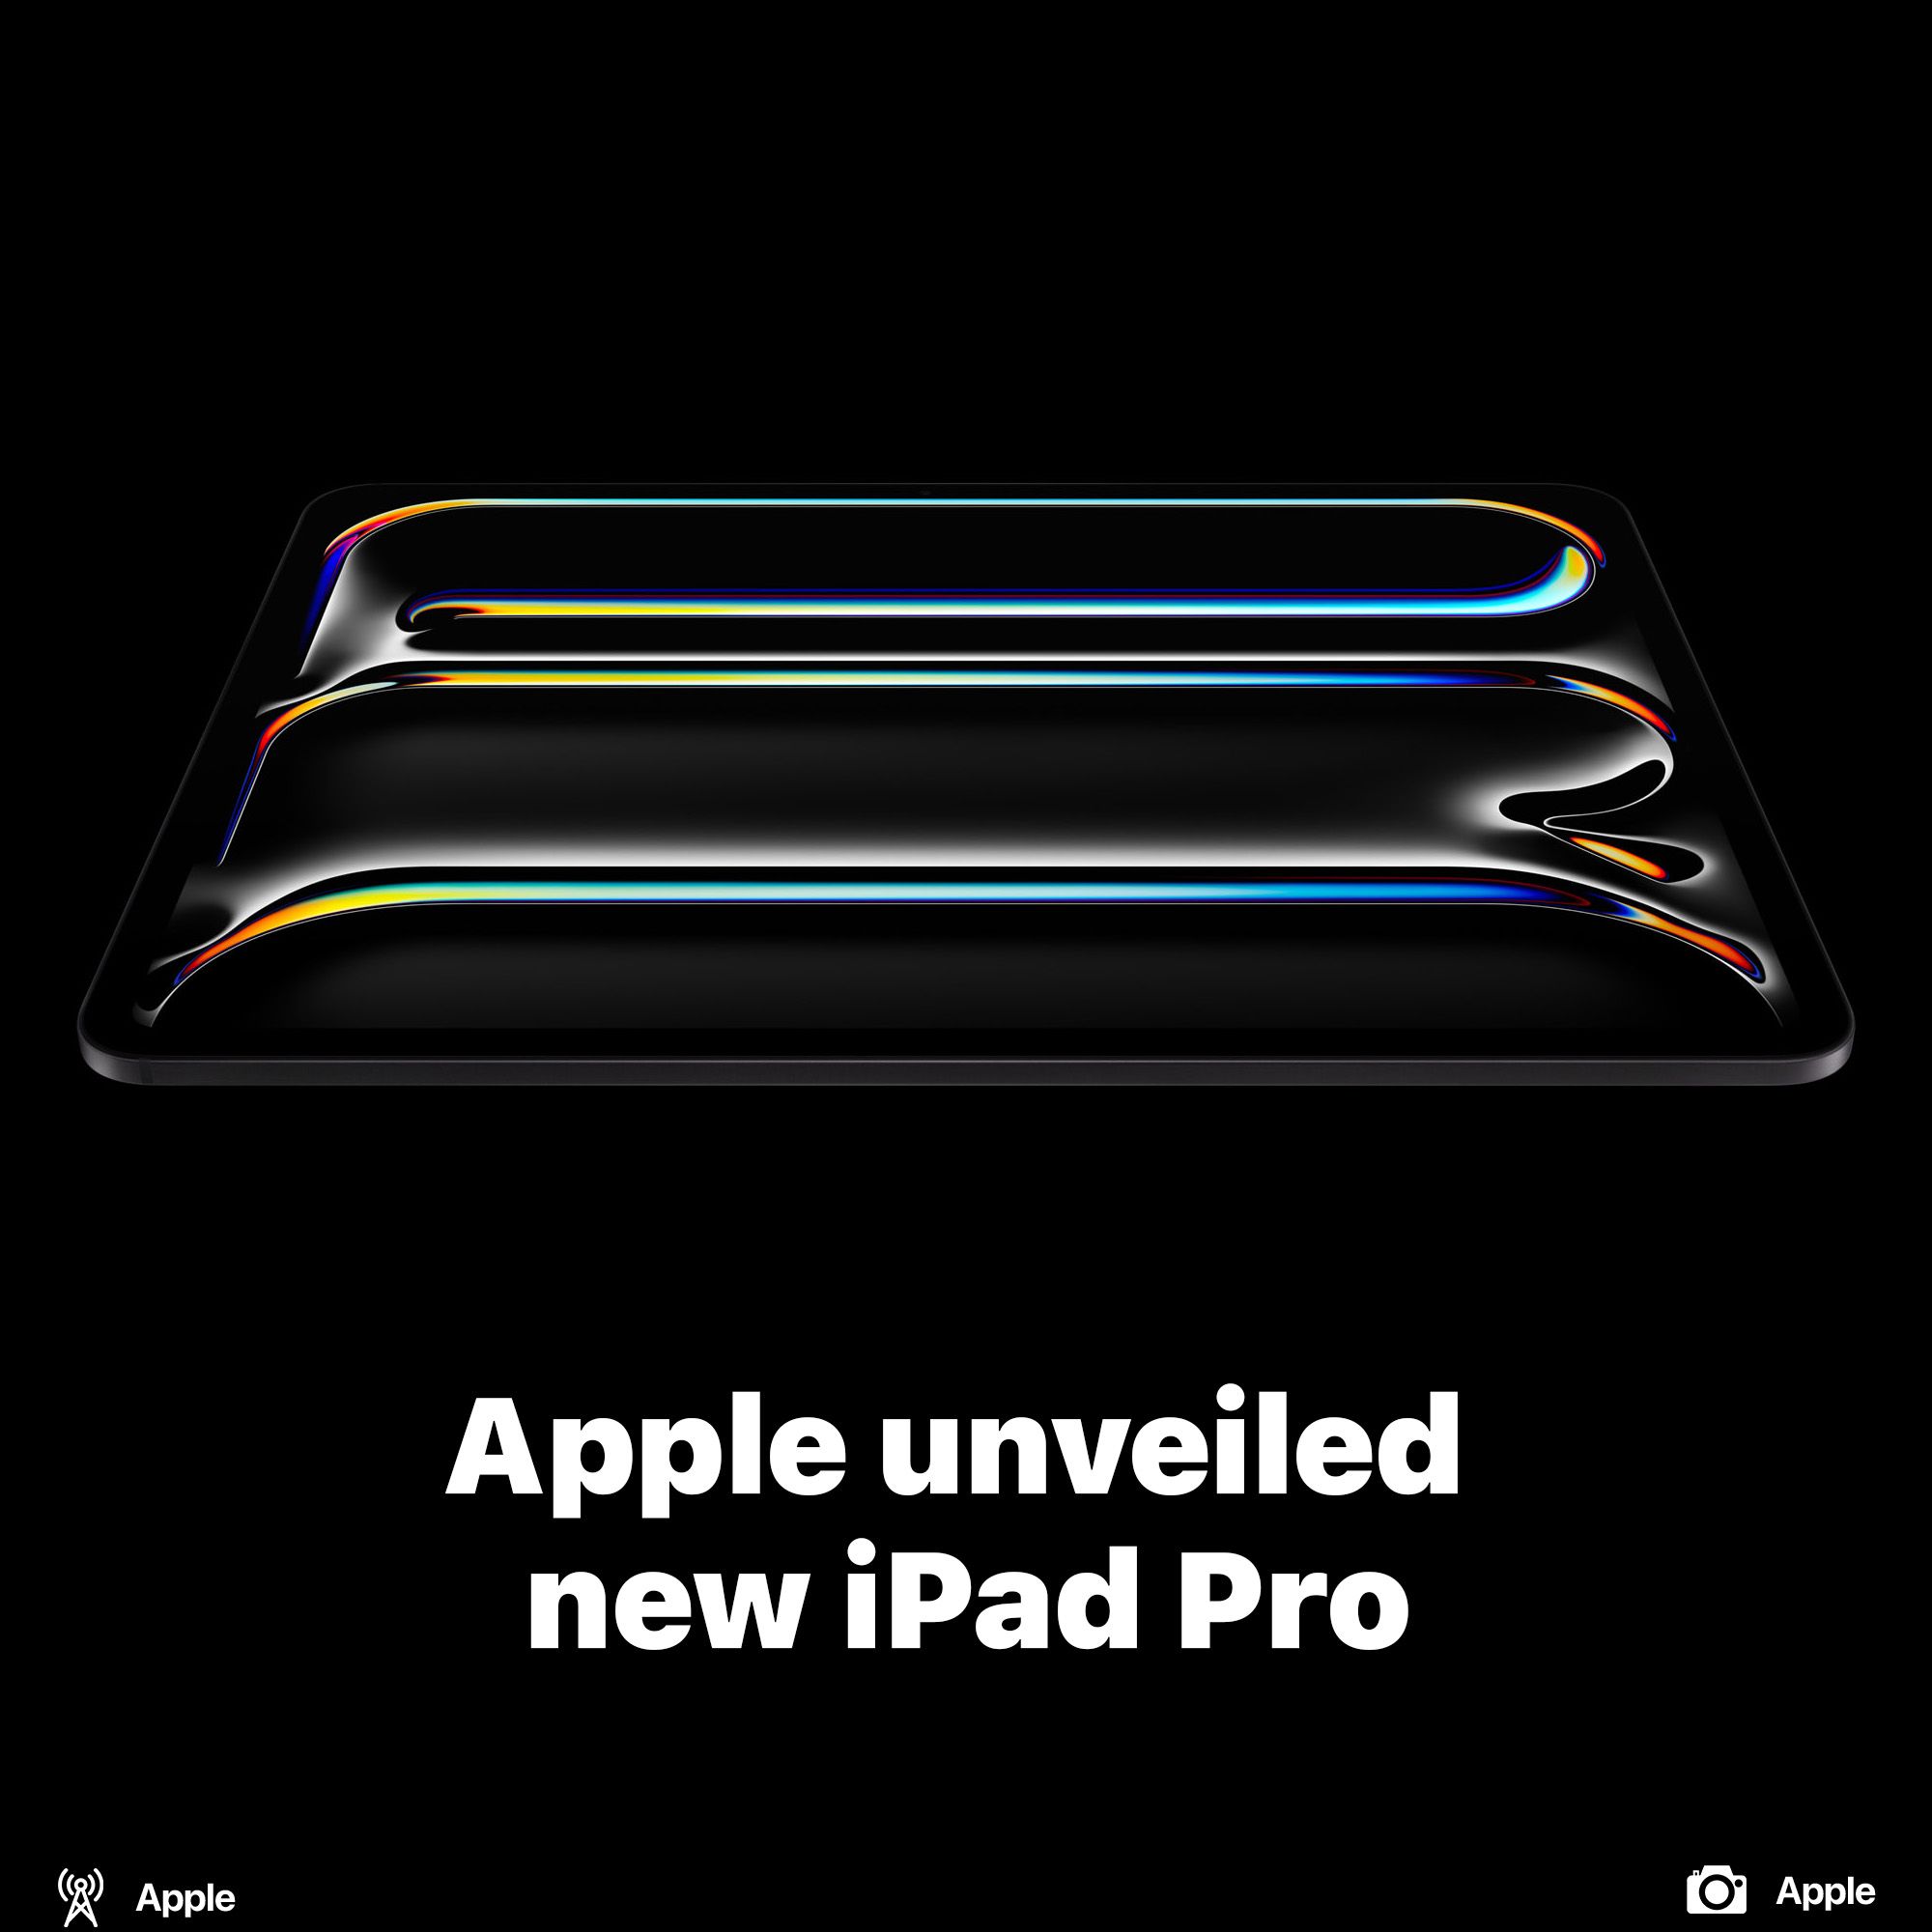 Apple unveiled new iPad Pro